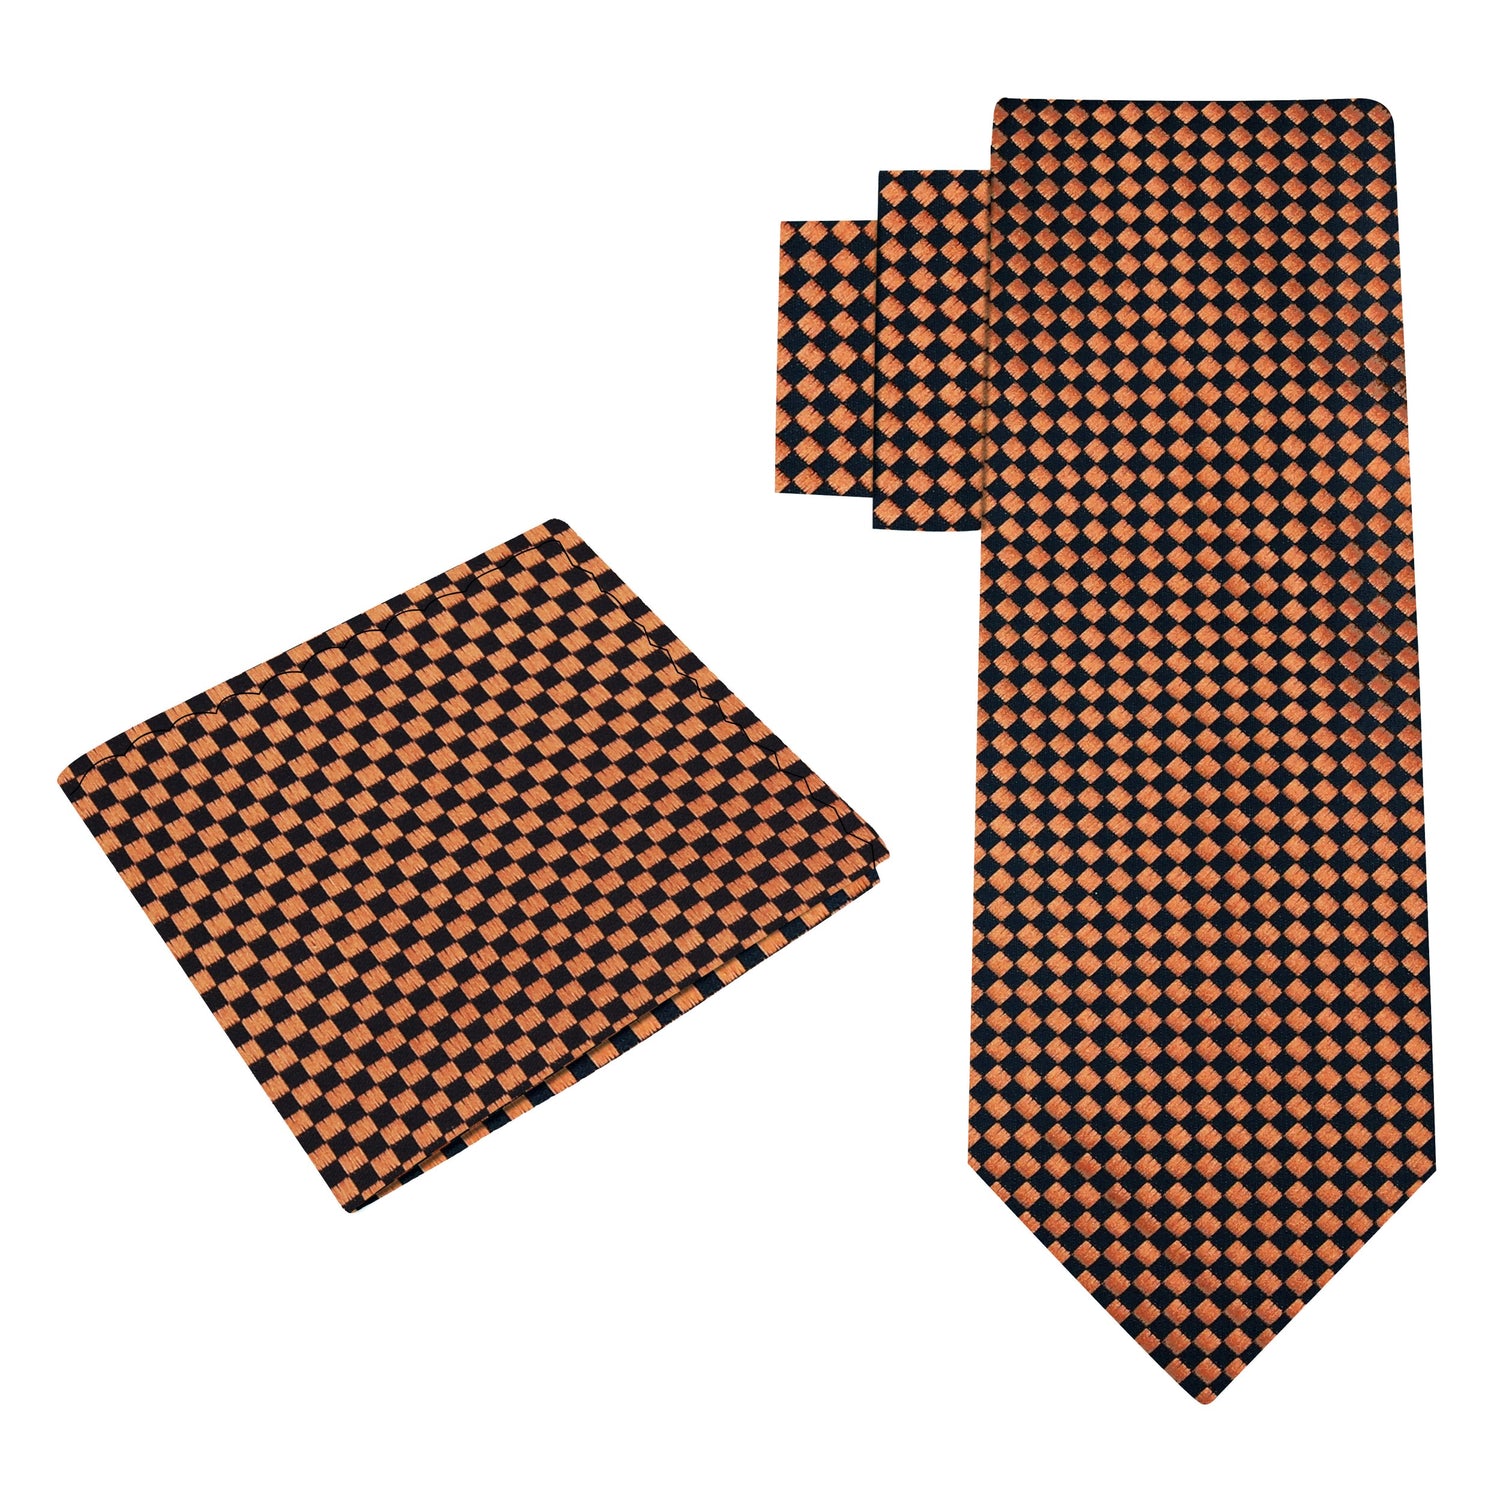 Alt View: A Brown, Black Check Pattern Silk Necktie, Matching Pocket Square